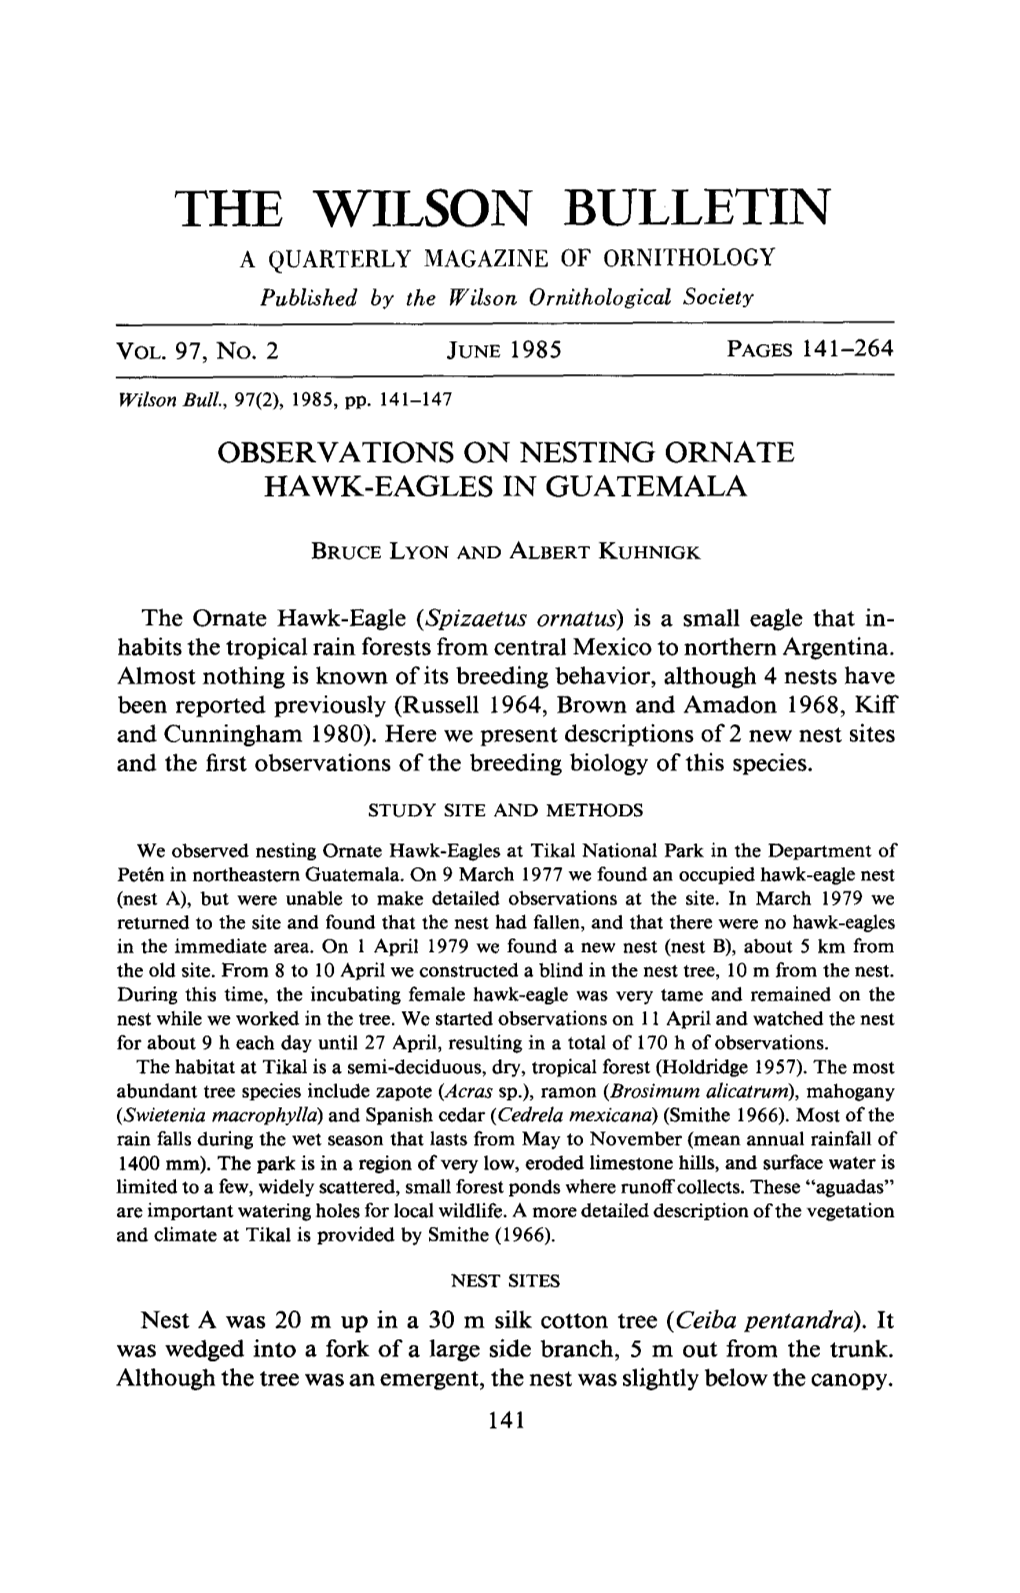 Observations on Nesting Ornate Hawk-Eagles in Guatemala